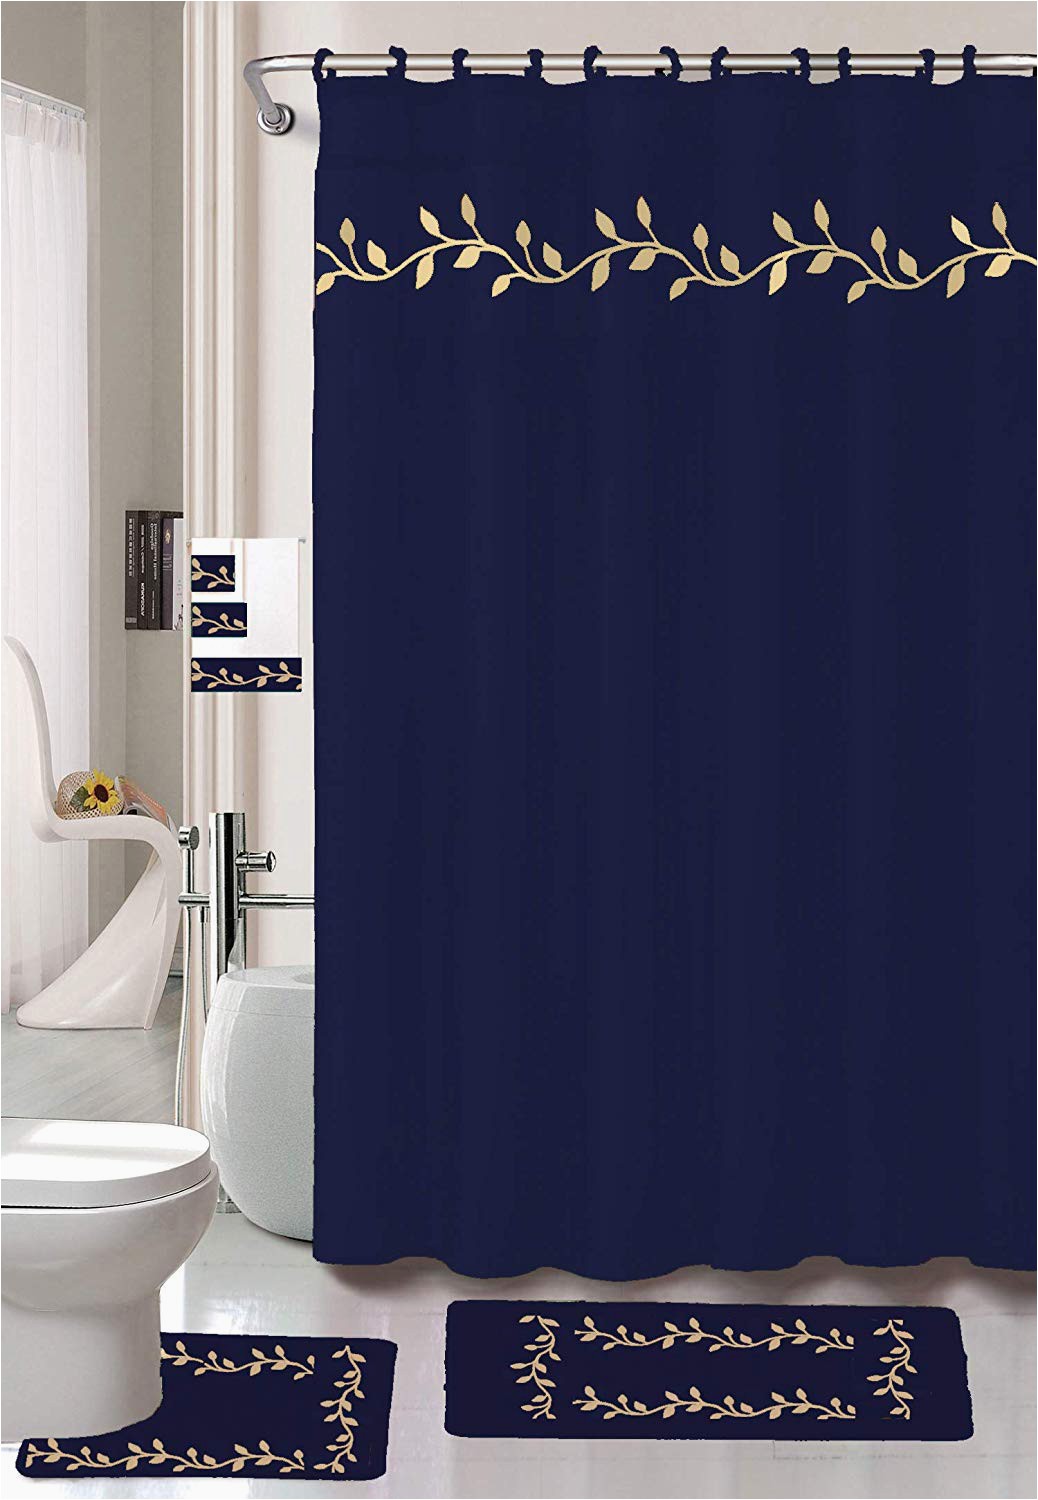 Bathroom Rug towel Set 18 Piece Bath Rug Set Prairie Navy Design Bathroom Rugs Matching Shower Curtain Mat Rings towel Set Walmart